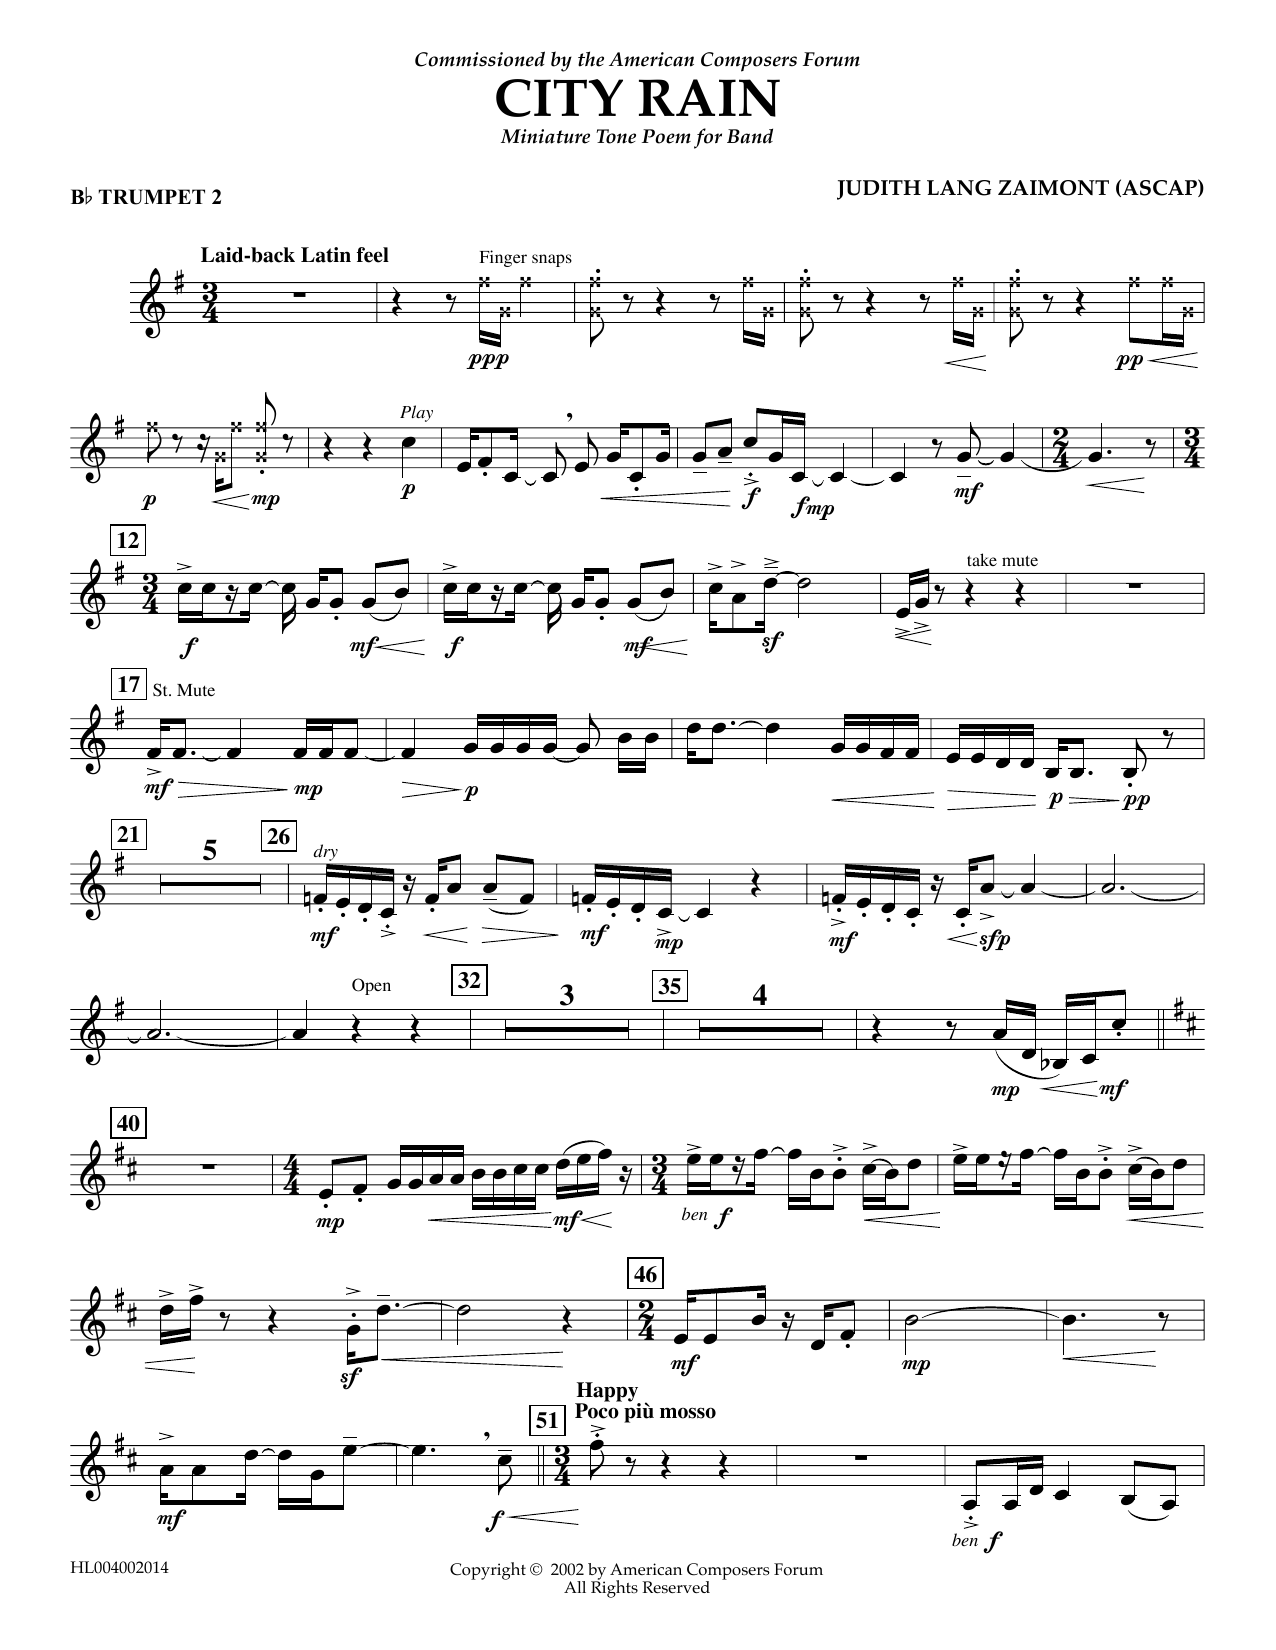 Download Judith Zaimont City Rain - Bb Trumpet 2 Sheet Music